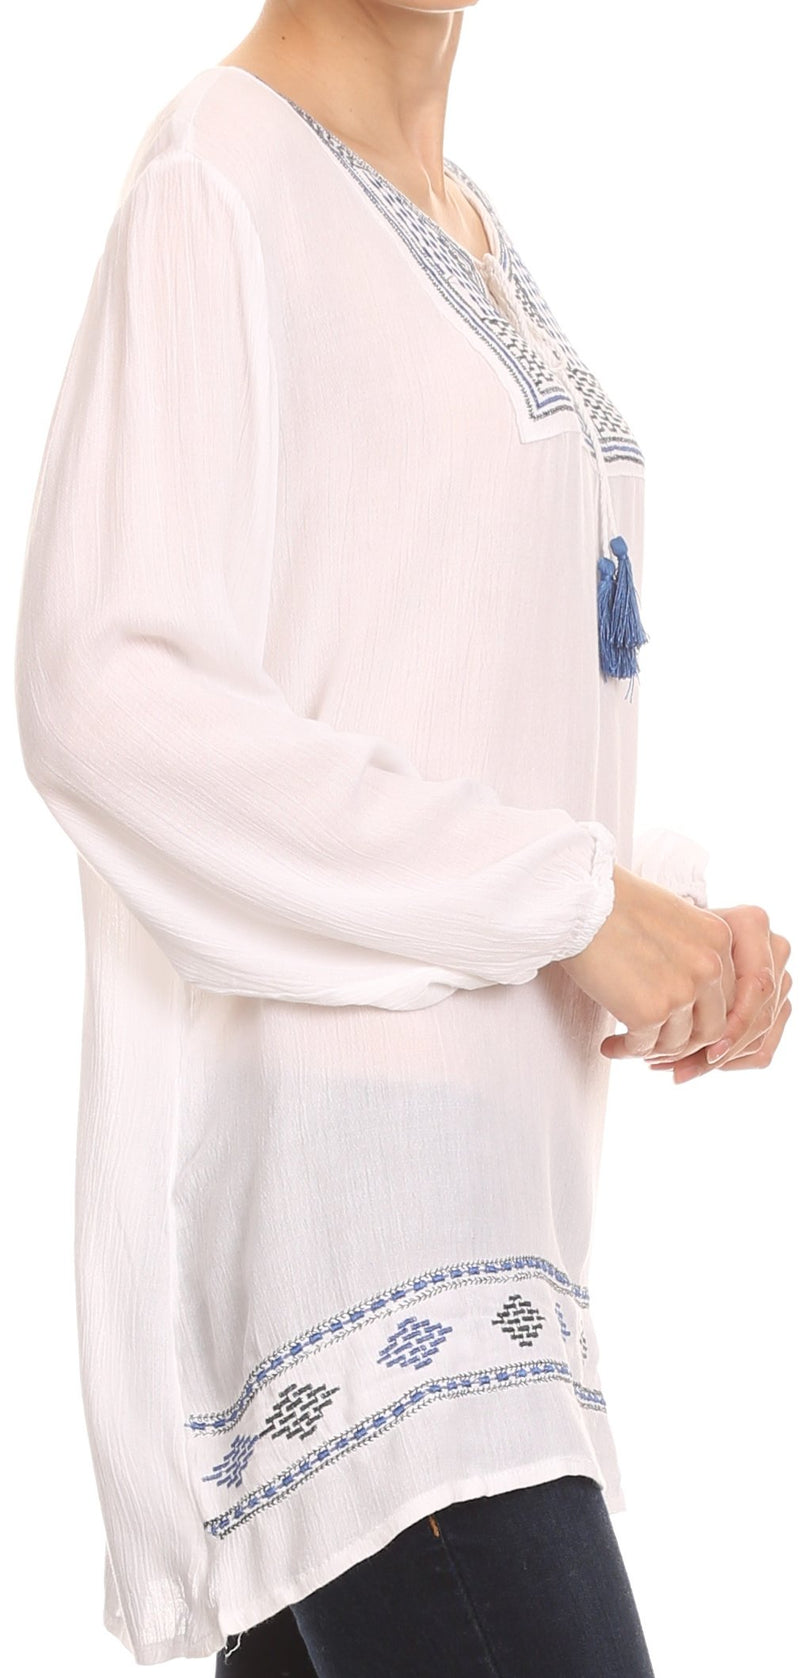 Sakkas Samne Long 3/4 Length Sleeve Embroidered Batik Blouse Tunic Shirt Top